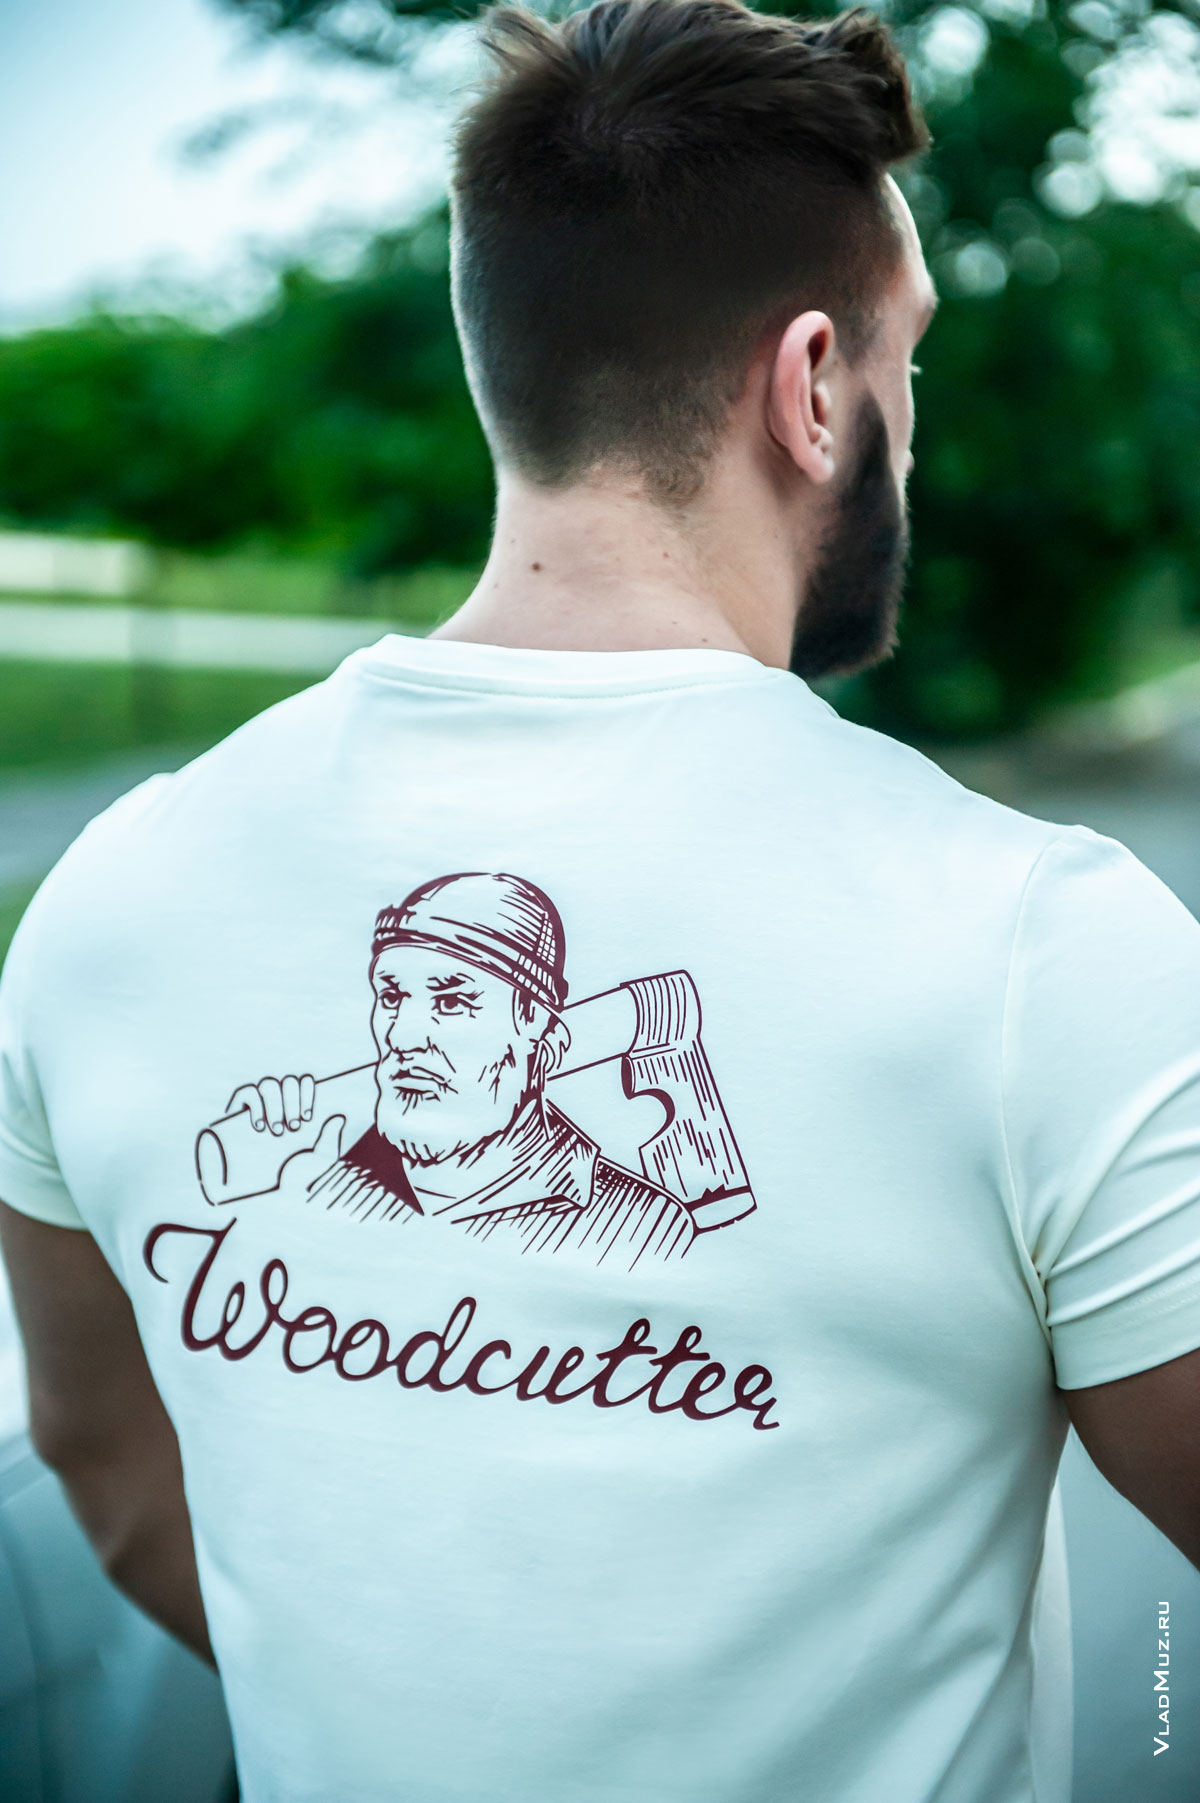      Woodcutter 